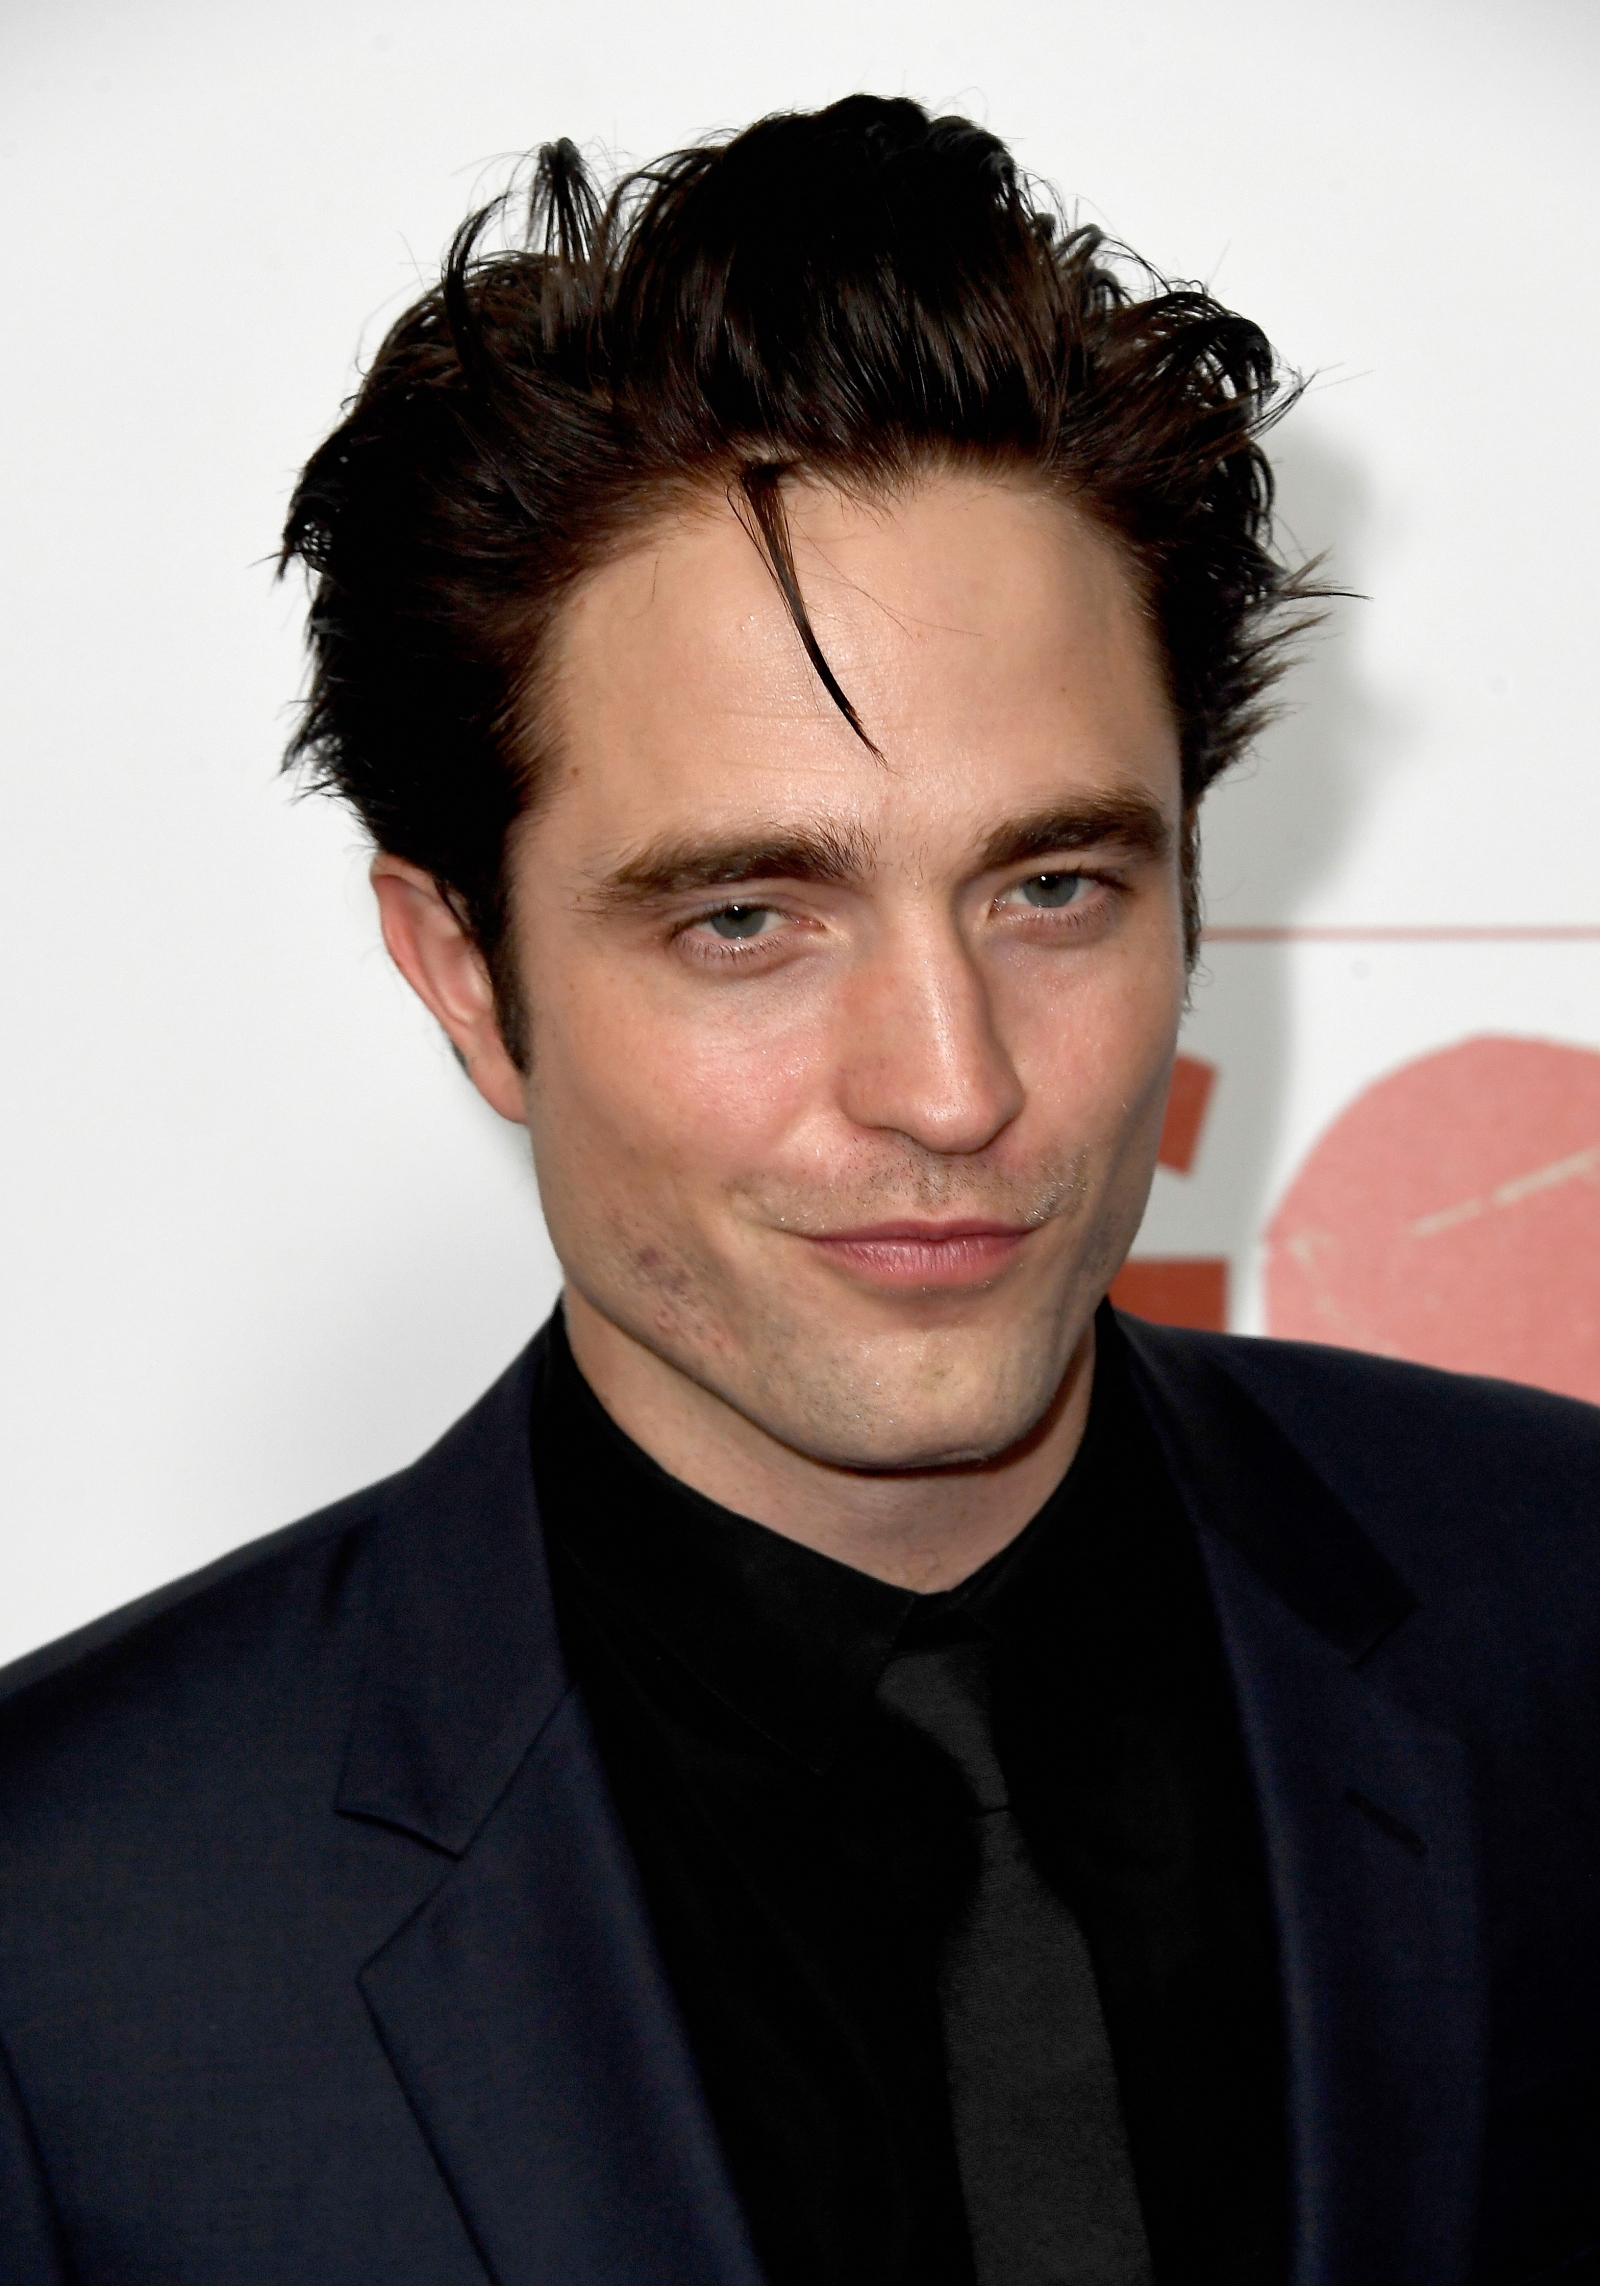 Robert Pattinson's new look as alter-ego Edward Cullen sparks new Twilight movie rumours1600 x 2286